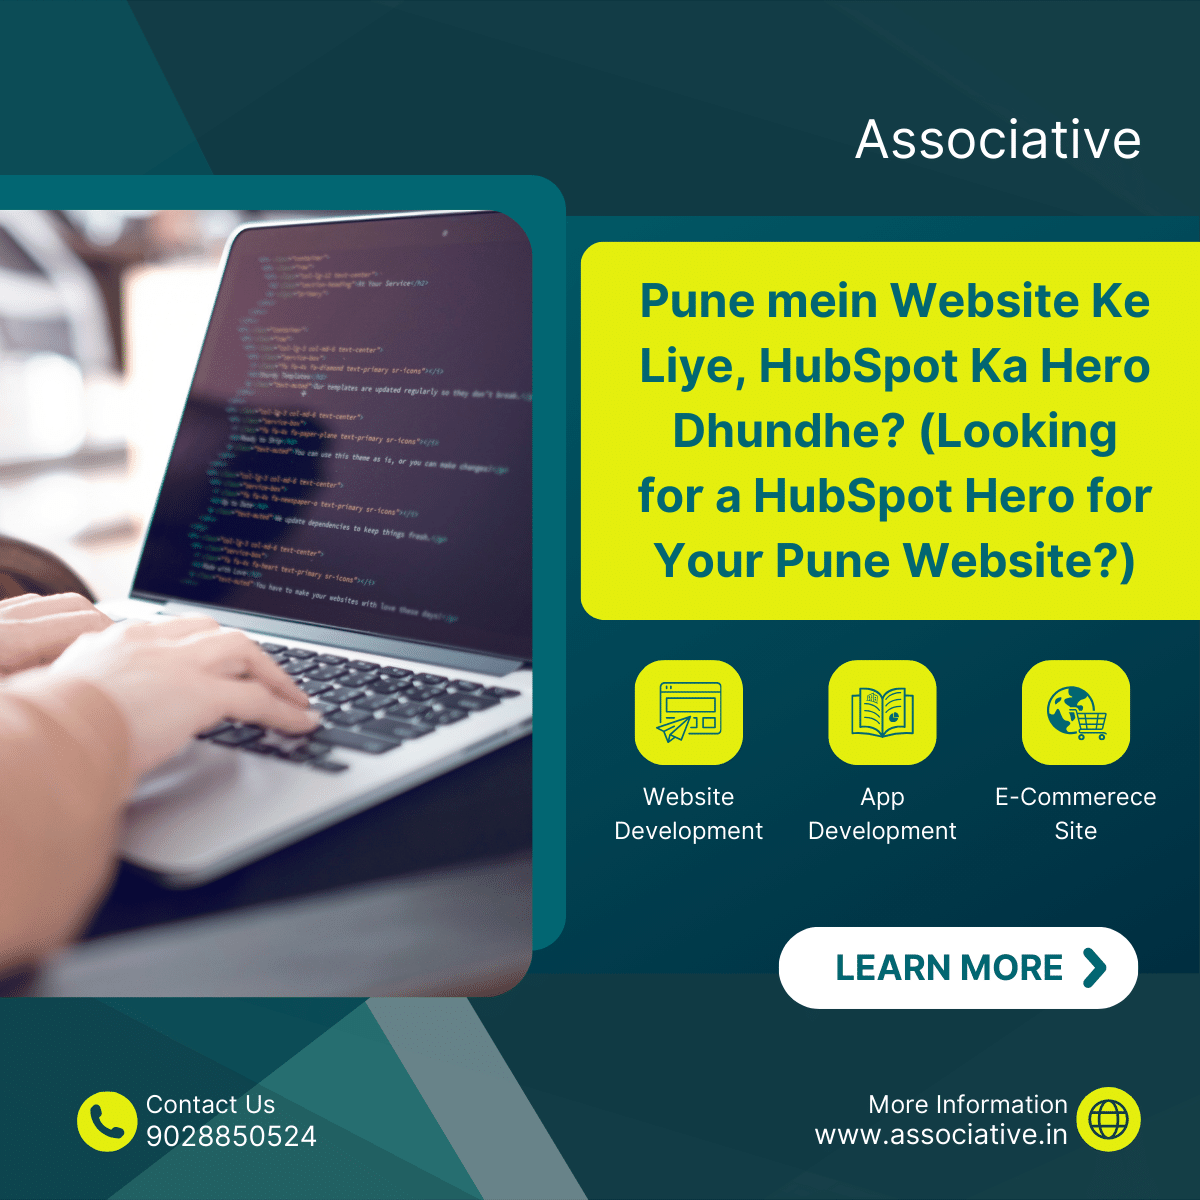 Pune mein Website Ke Liye, HubSpot Ka Hero Dhundhe? (Looking for a HubSpot Hero for Your Pune Website?)